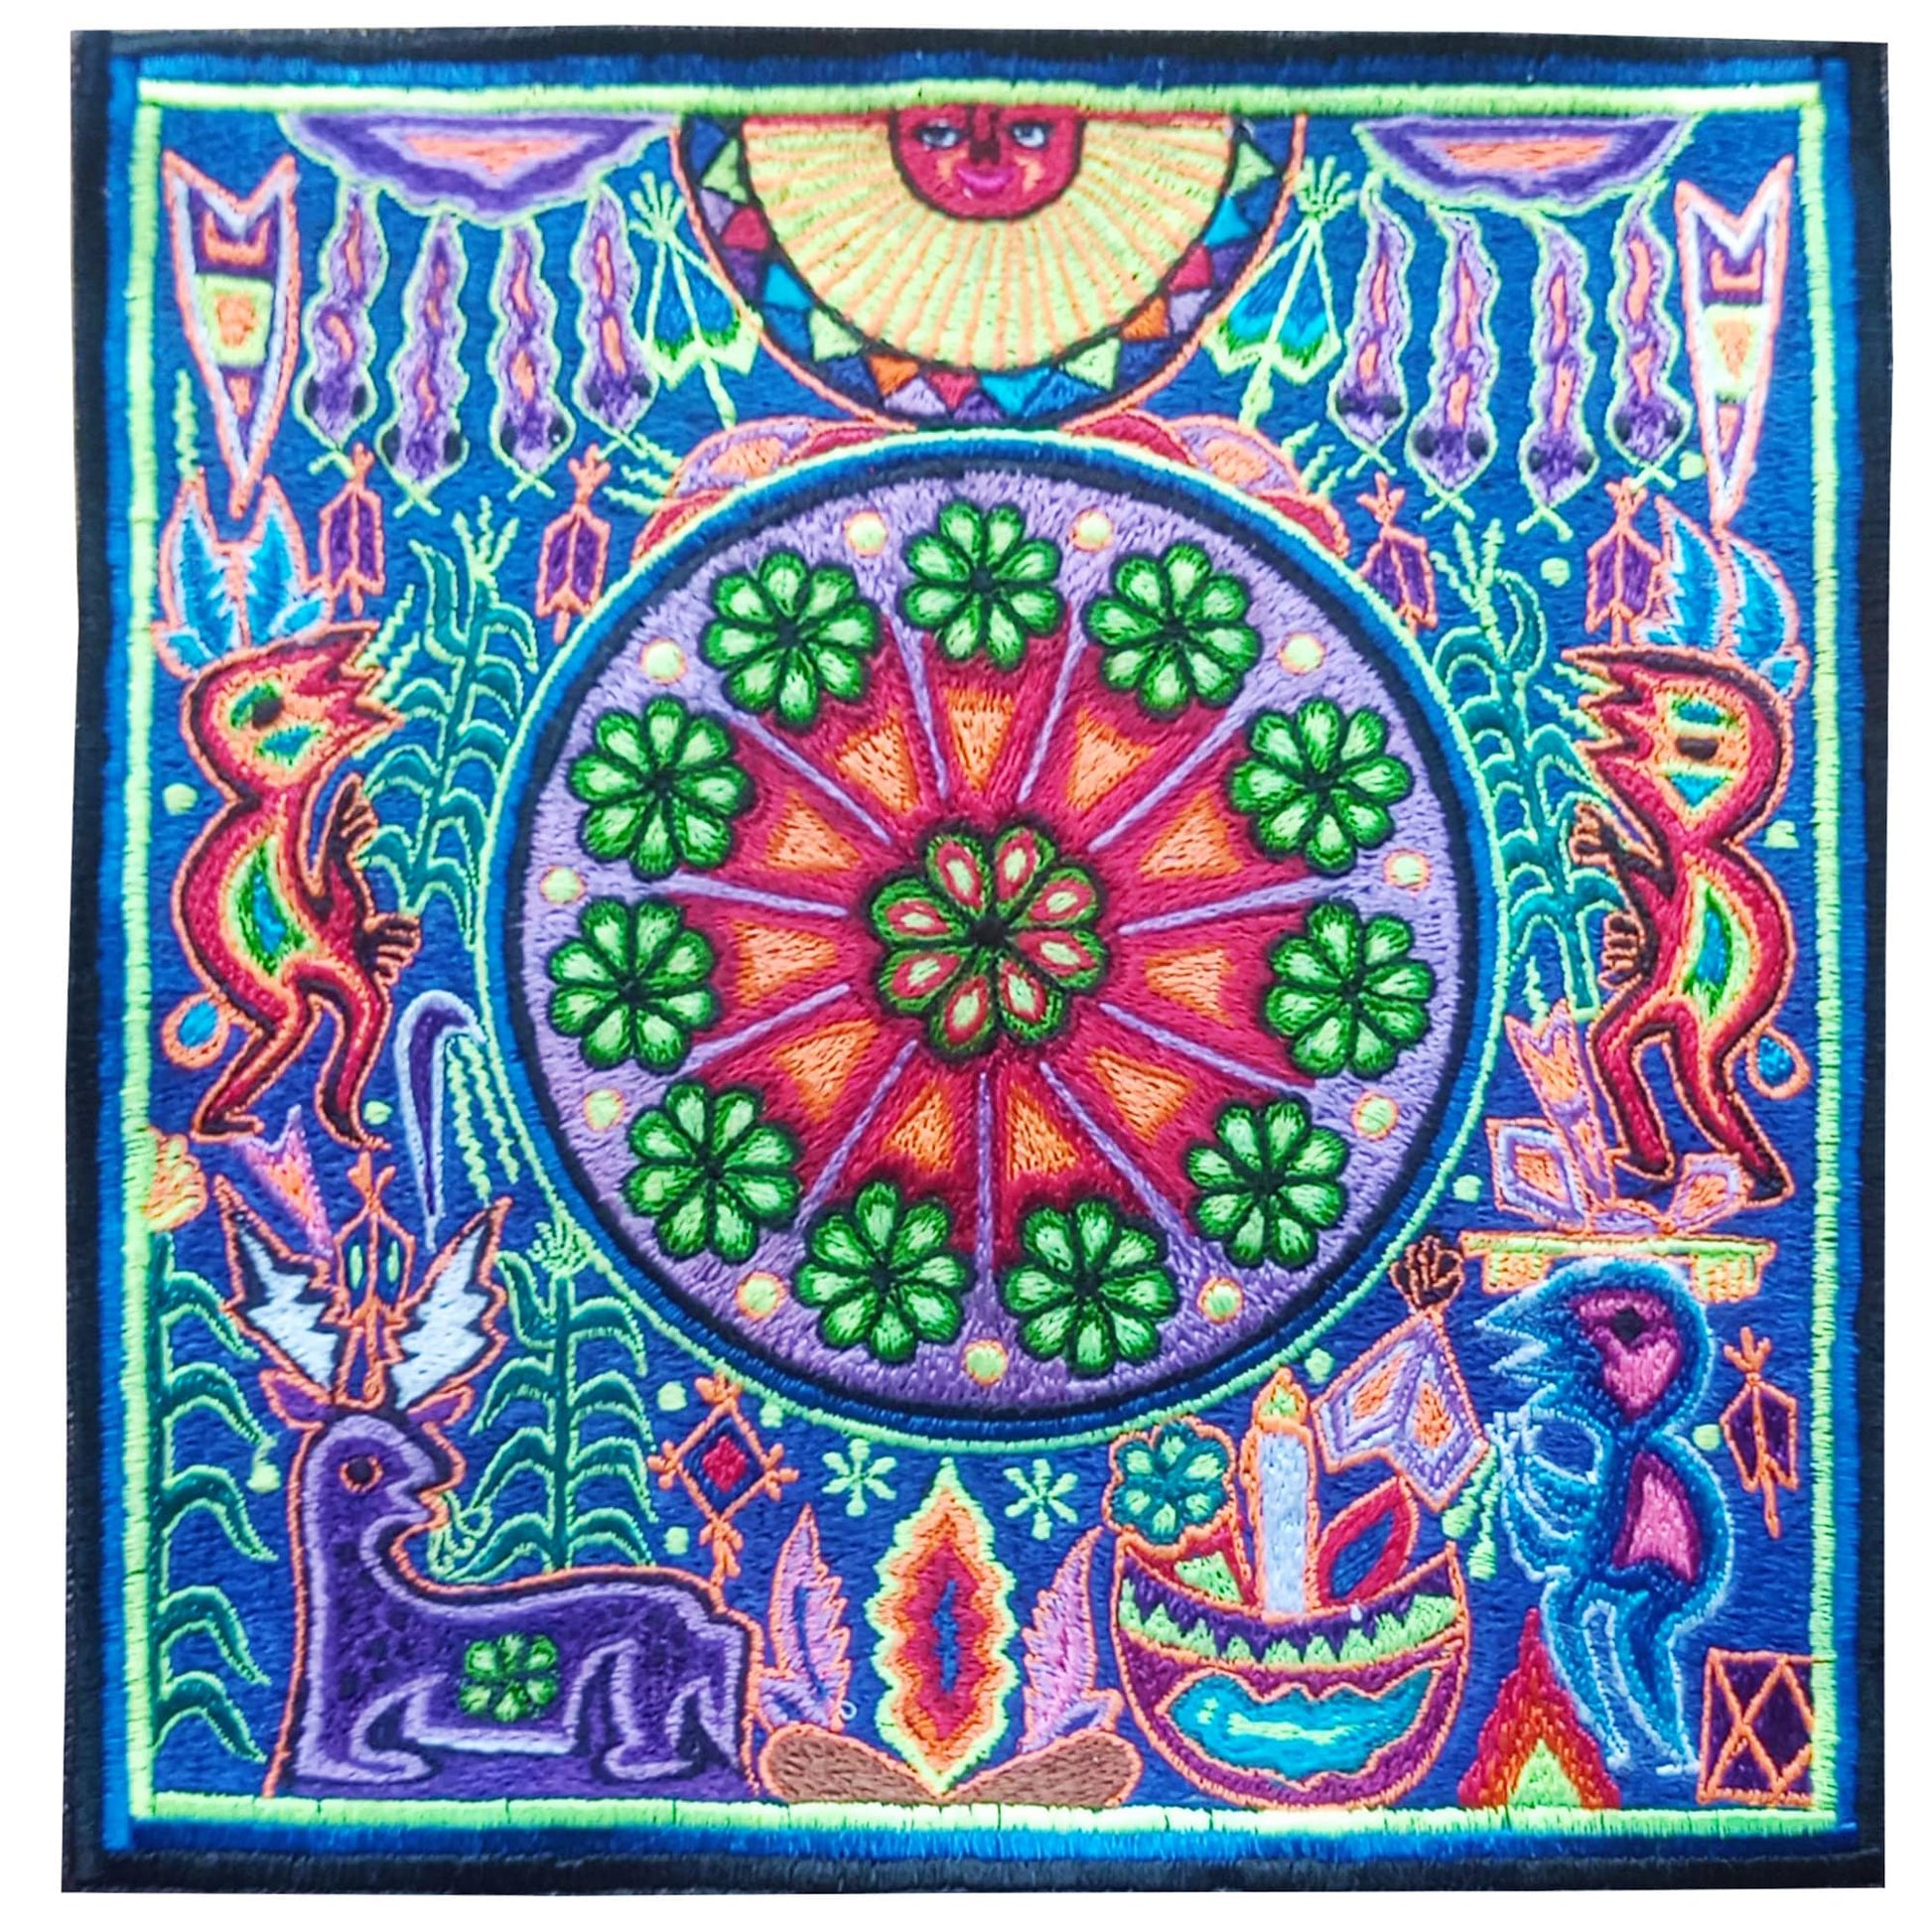 Huichol Peyote Ceremony embroidery art magic cactus artwork mescaline blacklight glowing psychedelic indigene decoration UV active glowing